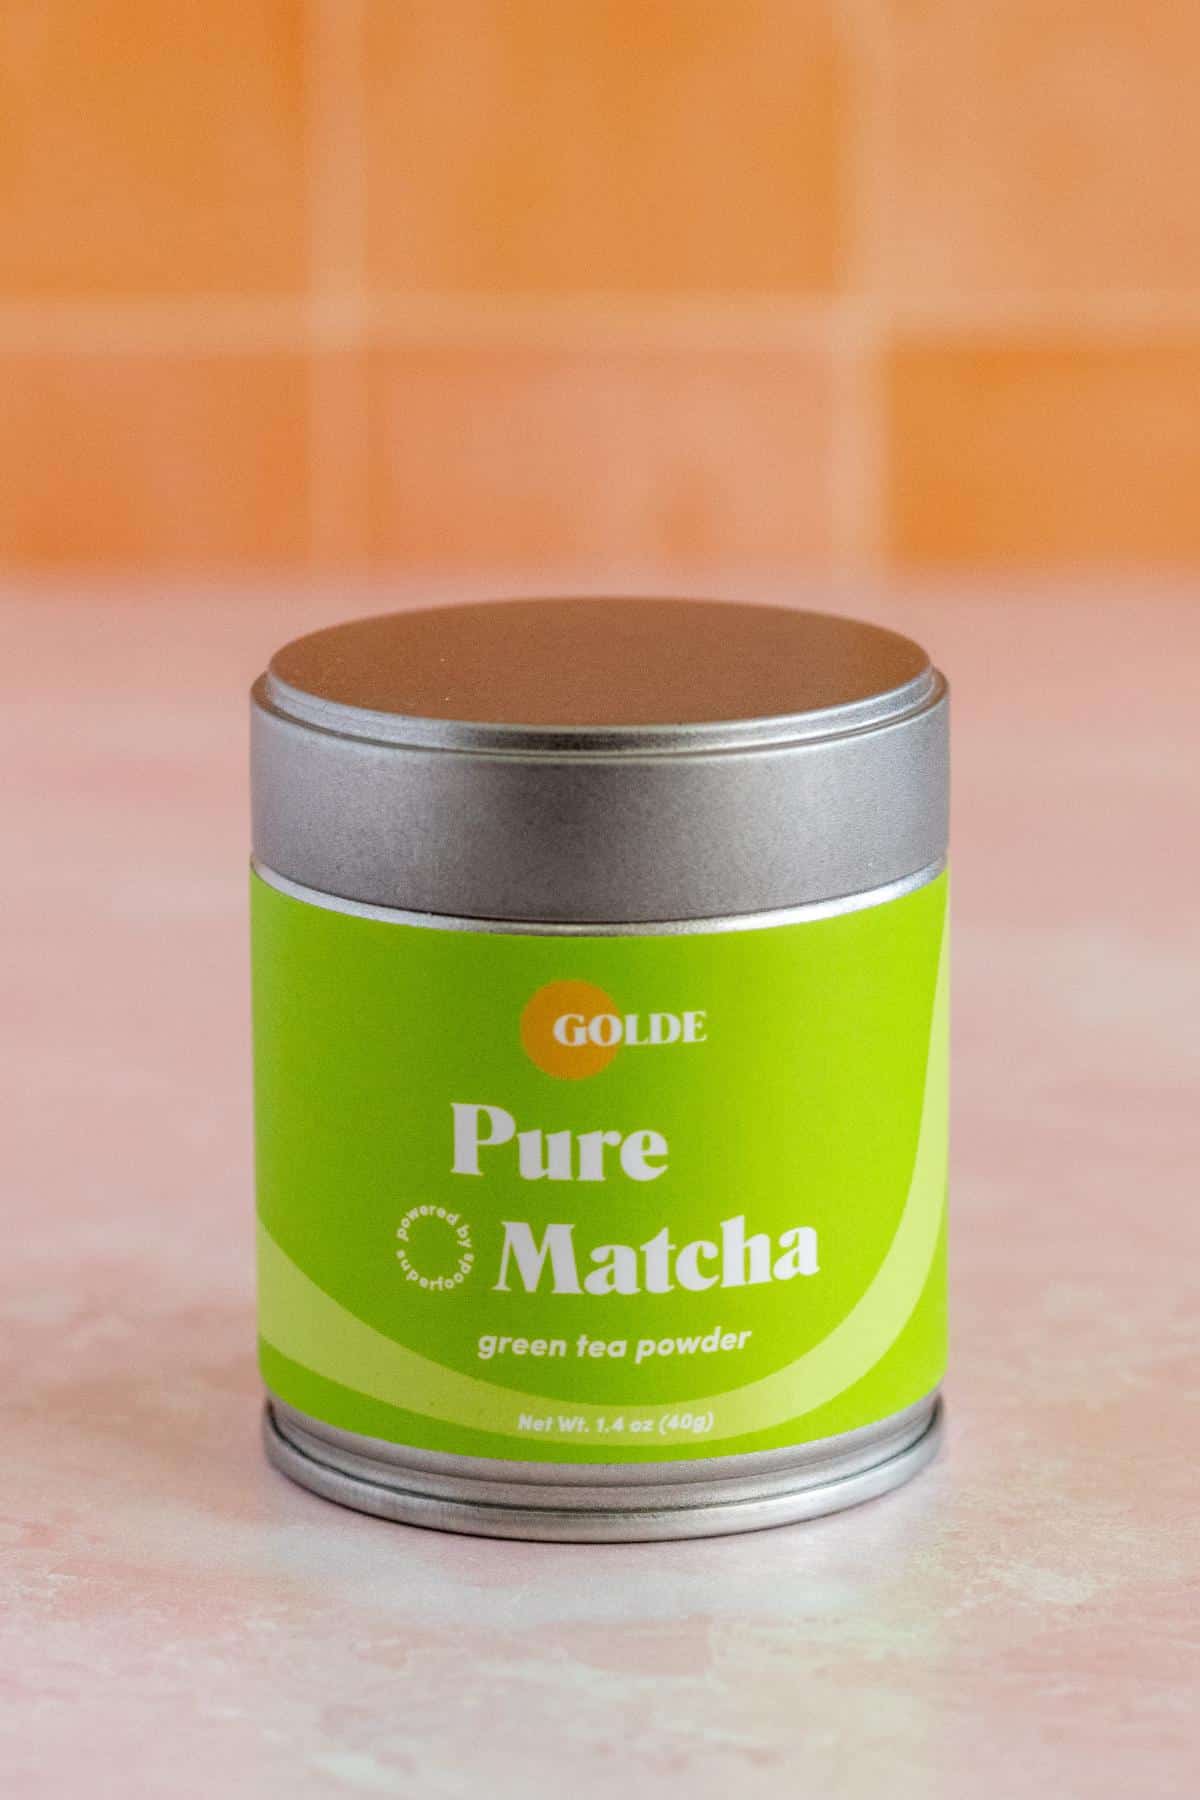 Tin of Golde Pure Matcha green tea powder.